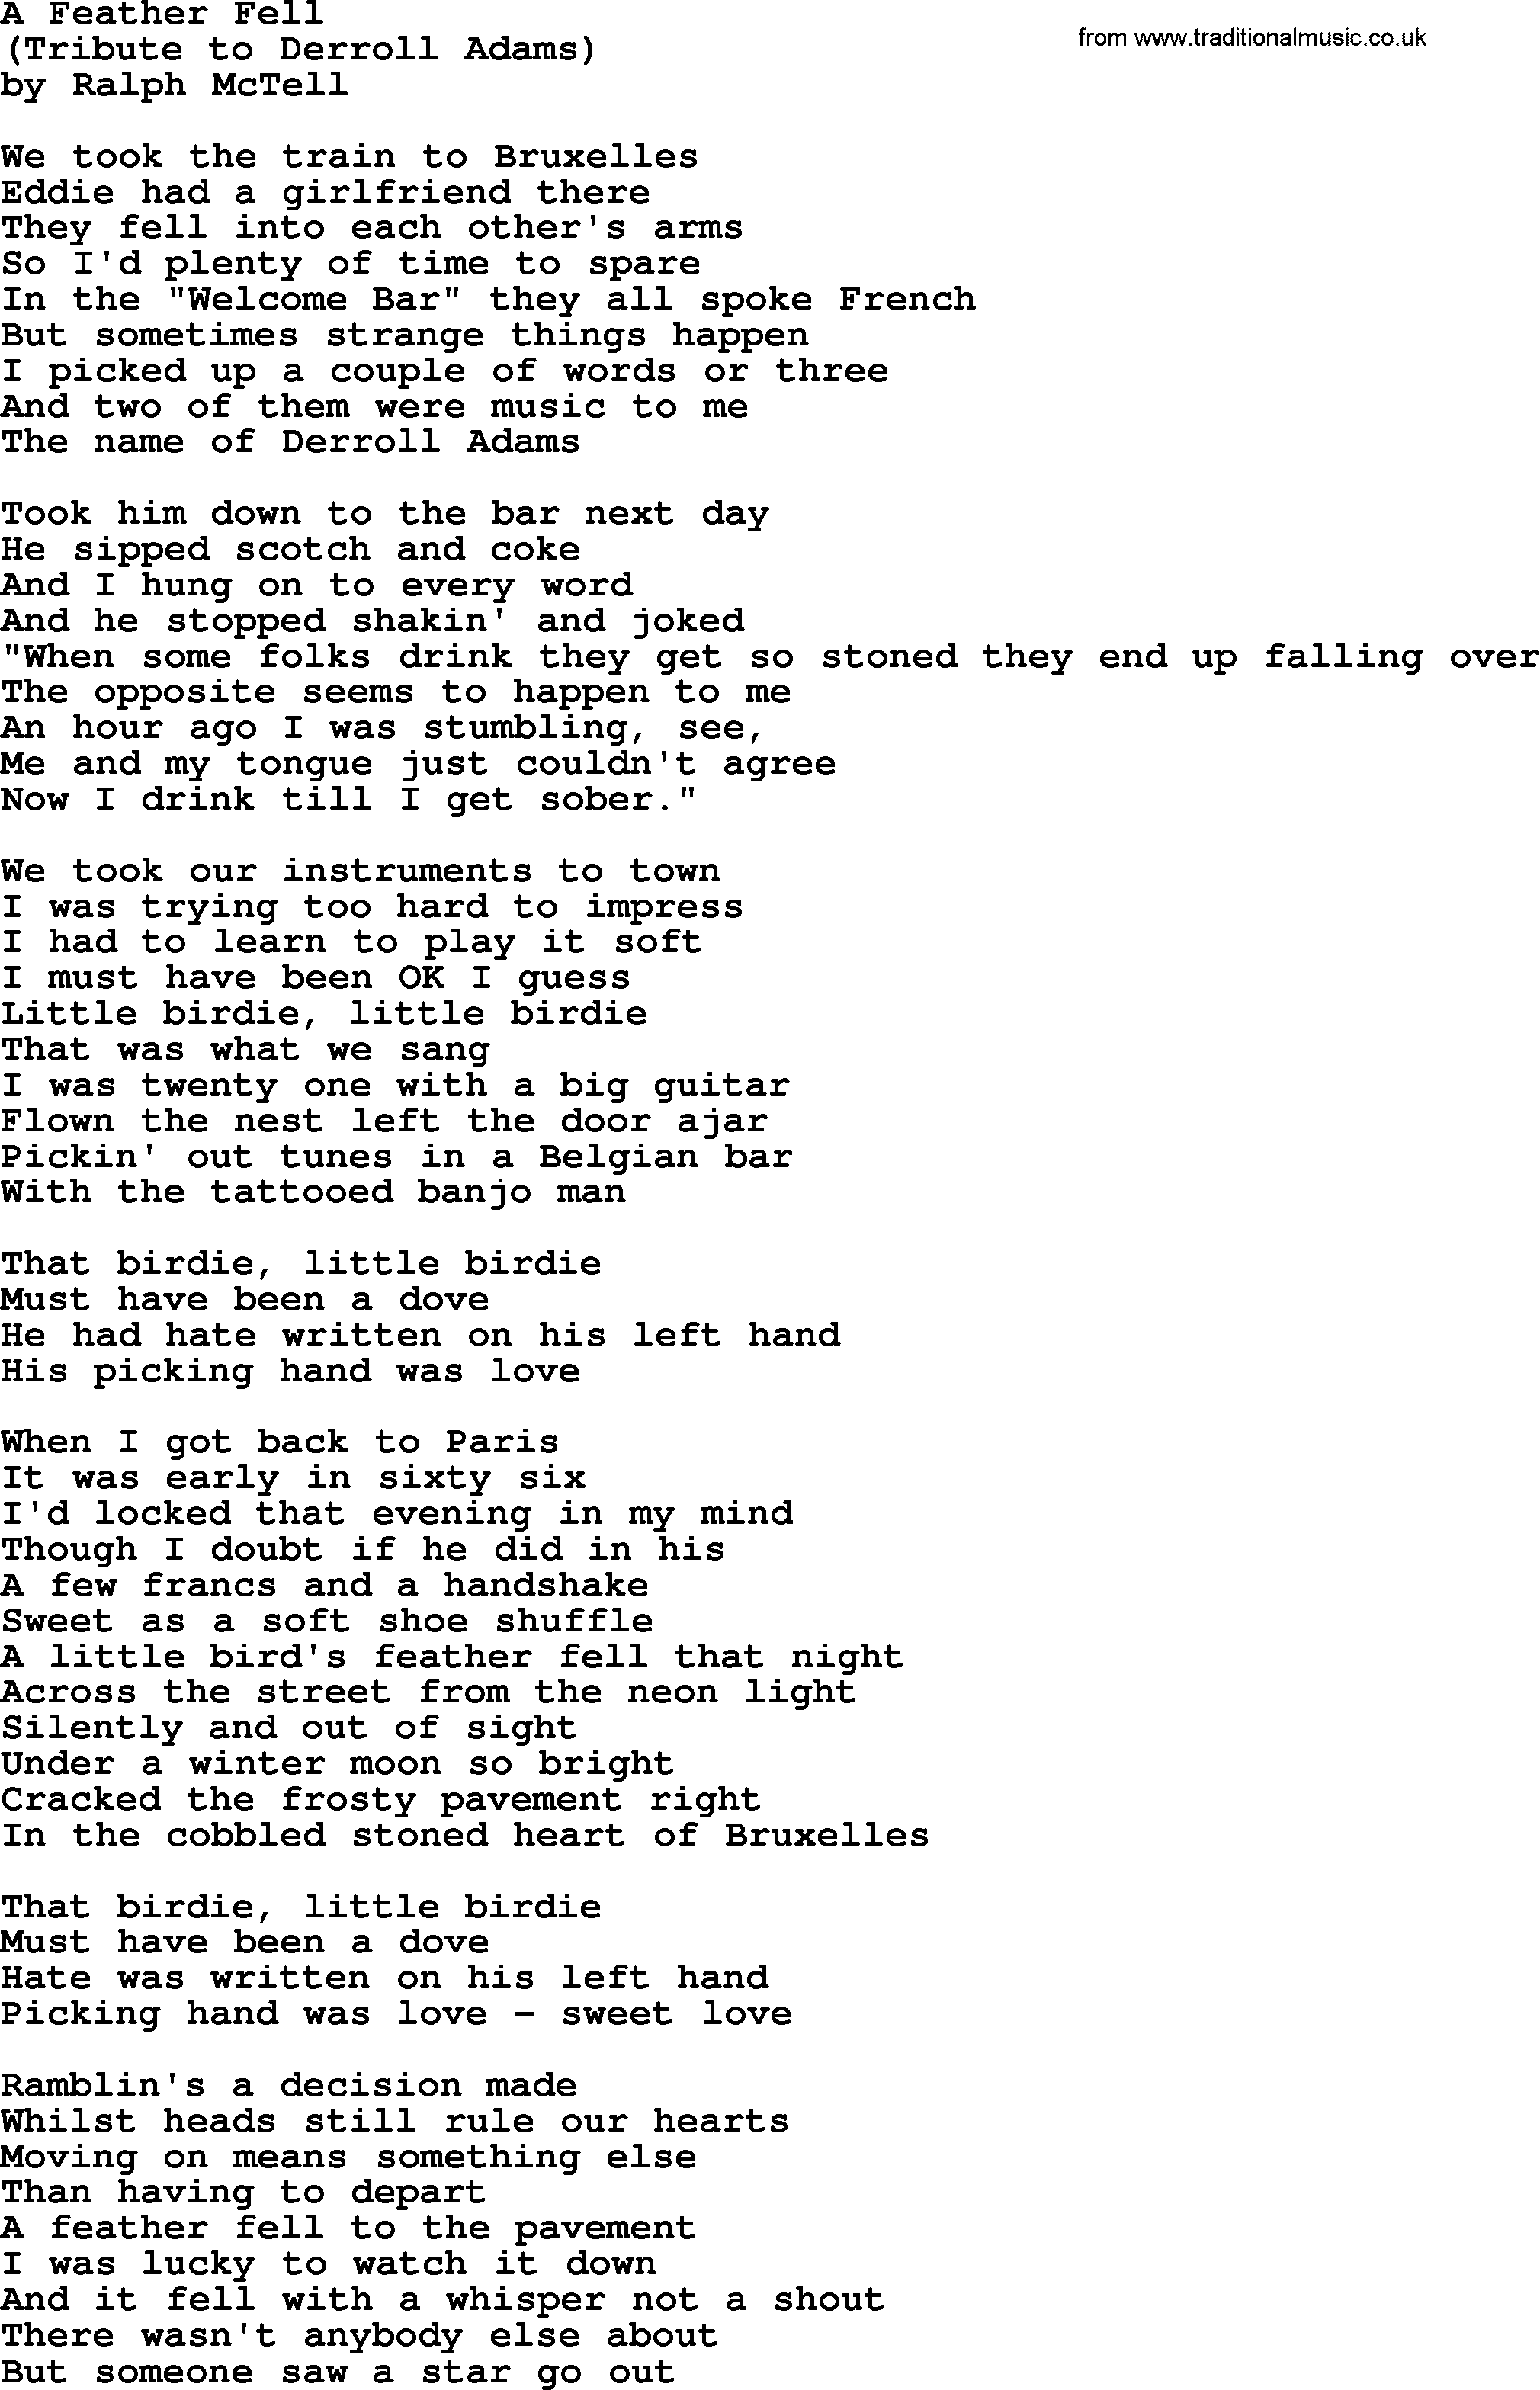 Ralph McTell Song: A Feather Fell, lyrics